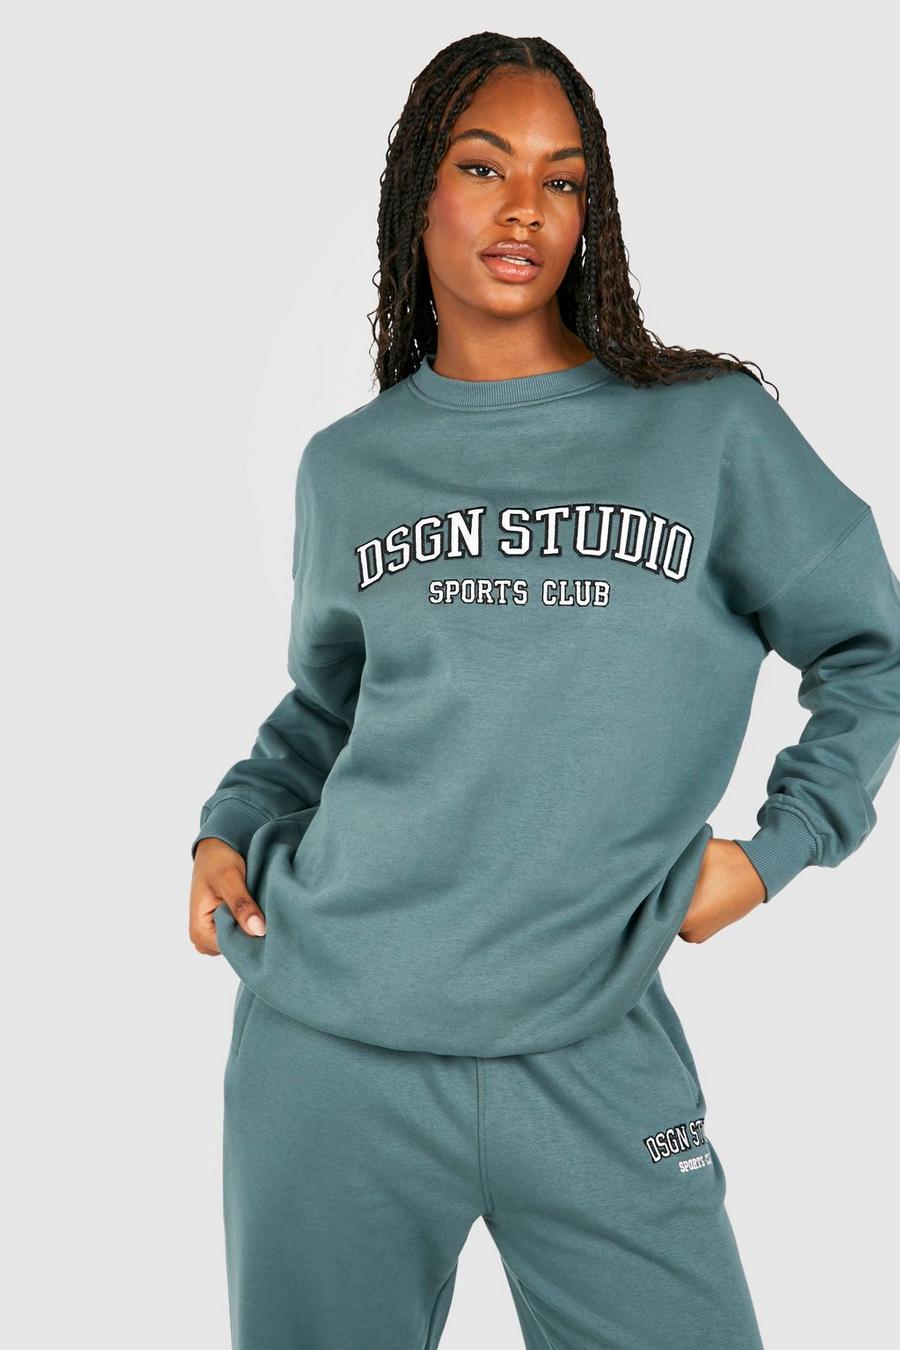 Tall Sweatshirt mit Dsgn Studio Applikation, Teal image number 1